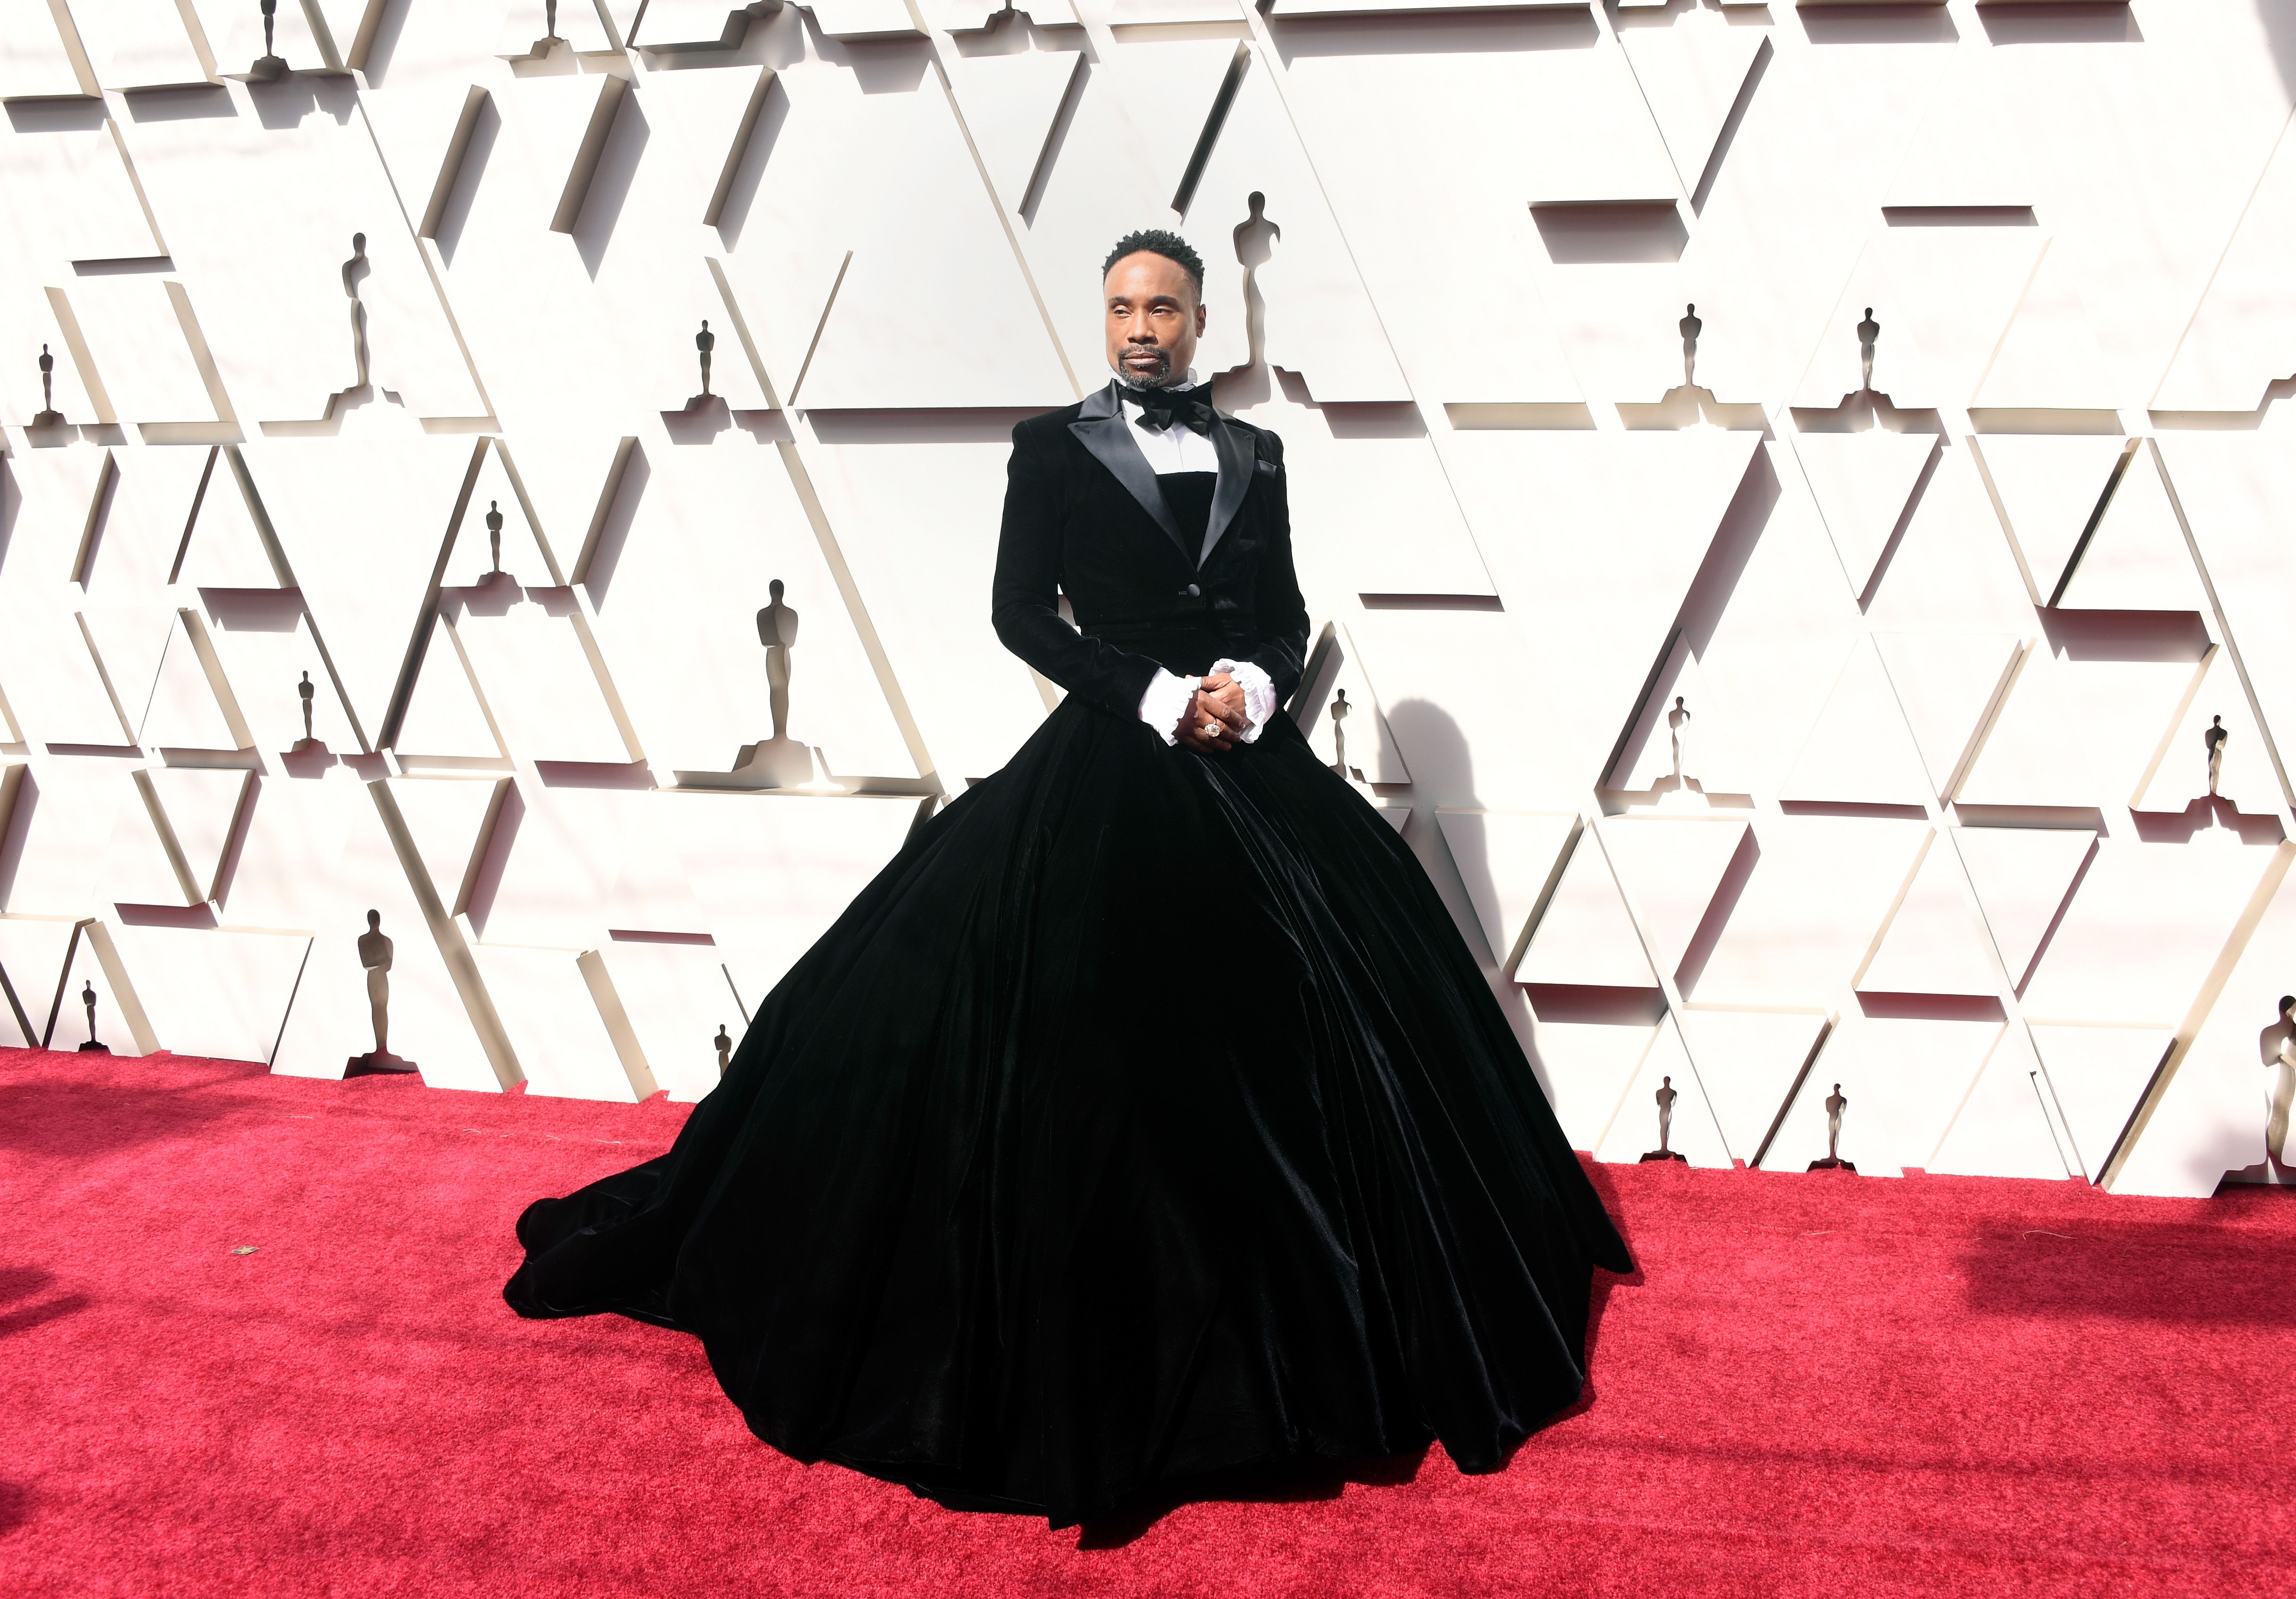 Tuxedo Gown on Oscars 2019 Red Carpet